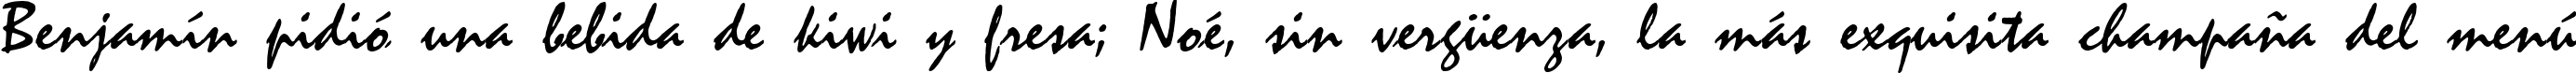 Пример написания шрифтом Mistral AV текста на испанском